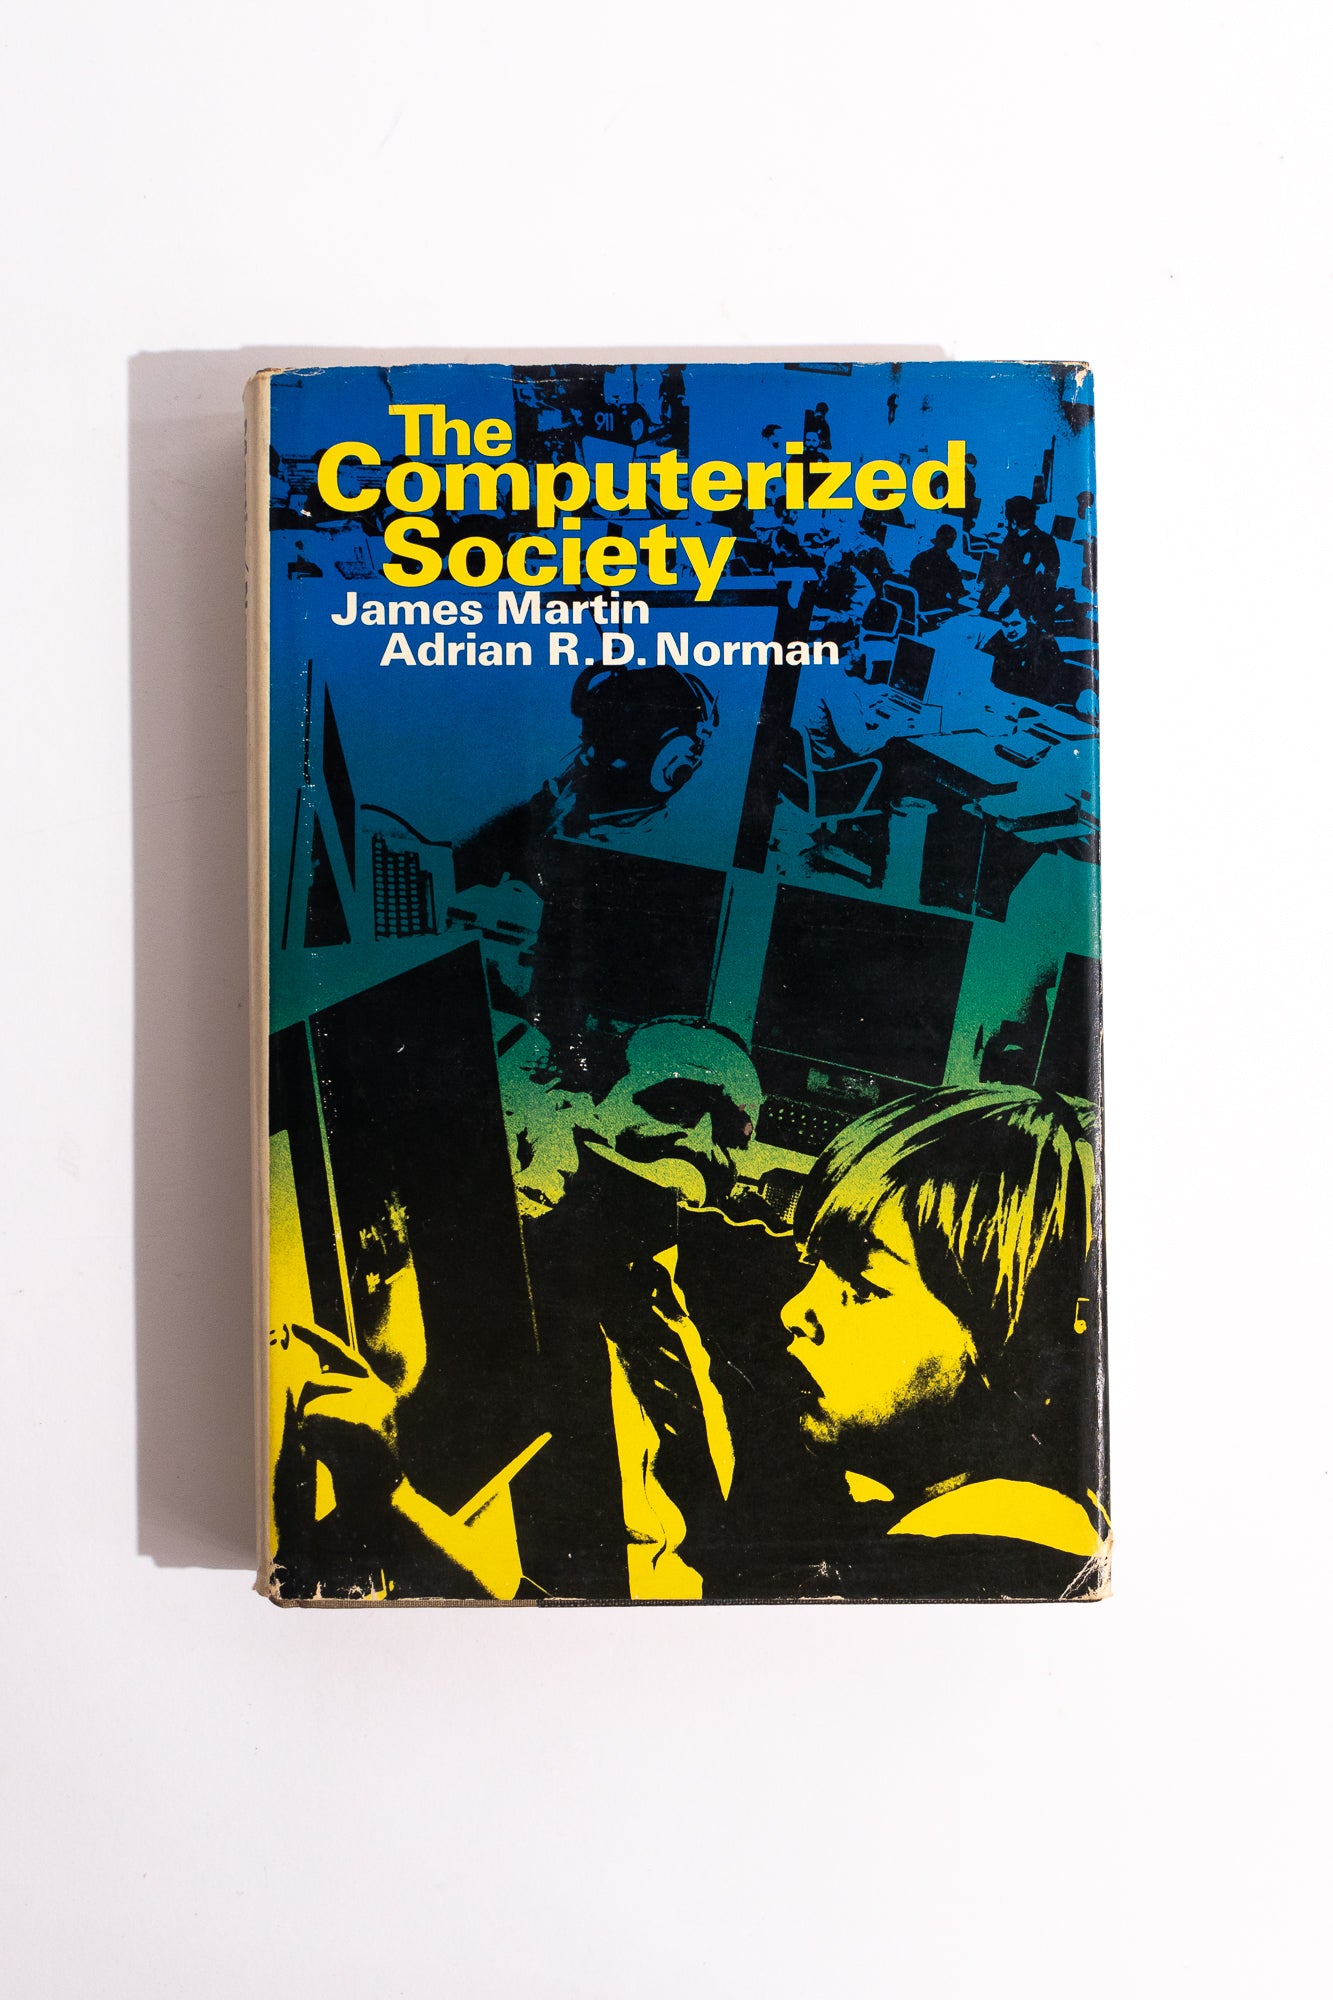 The Computerized Society